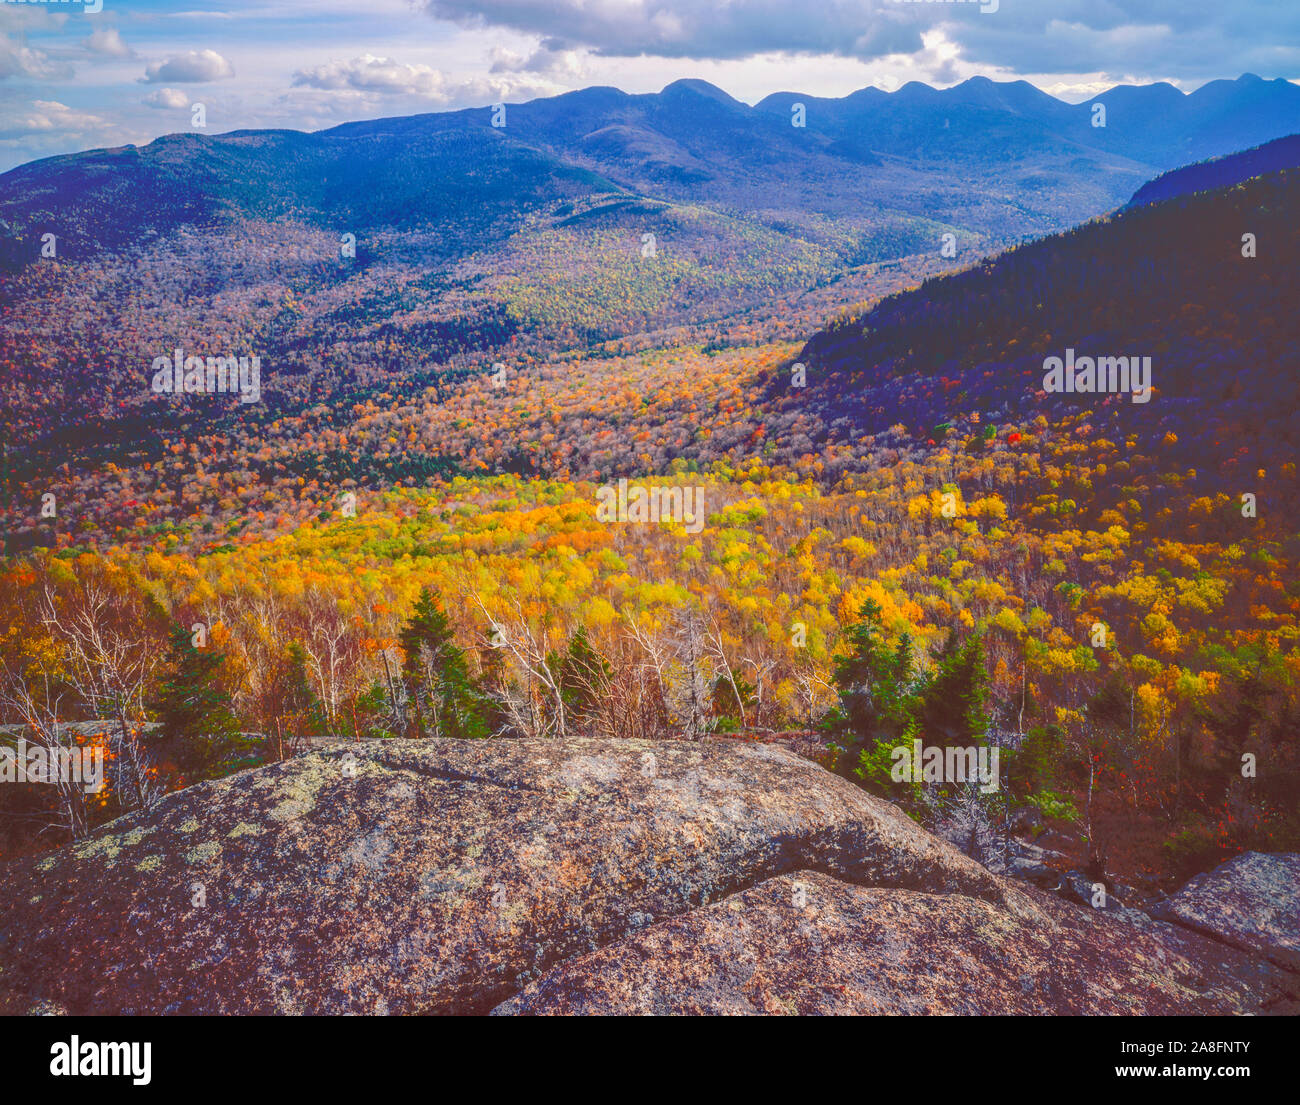 HIgh Peaks and fall colors, Adirondack Mountain Park, New York Adirondack Mountains Stock Photo